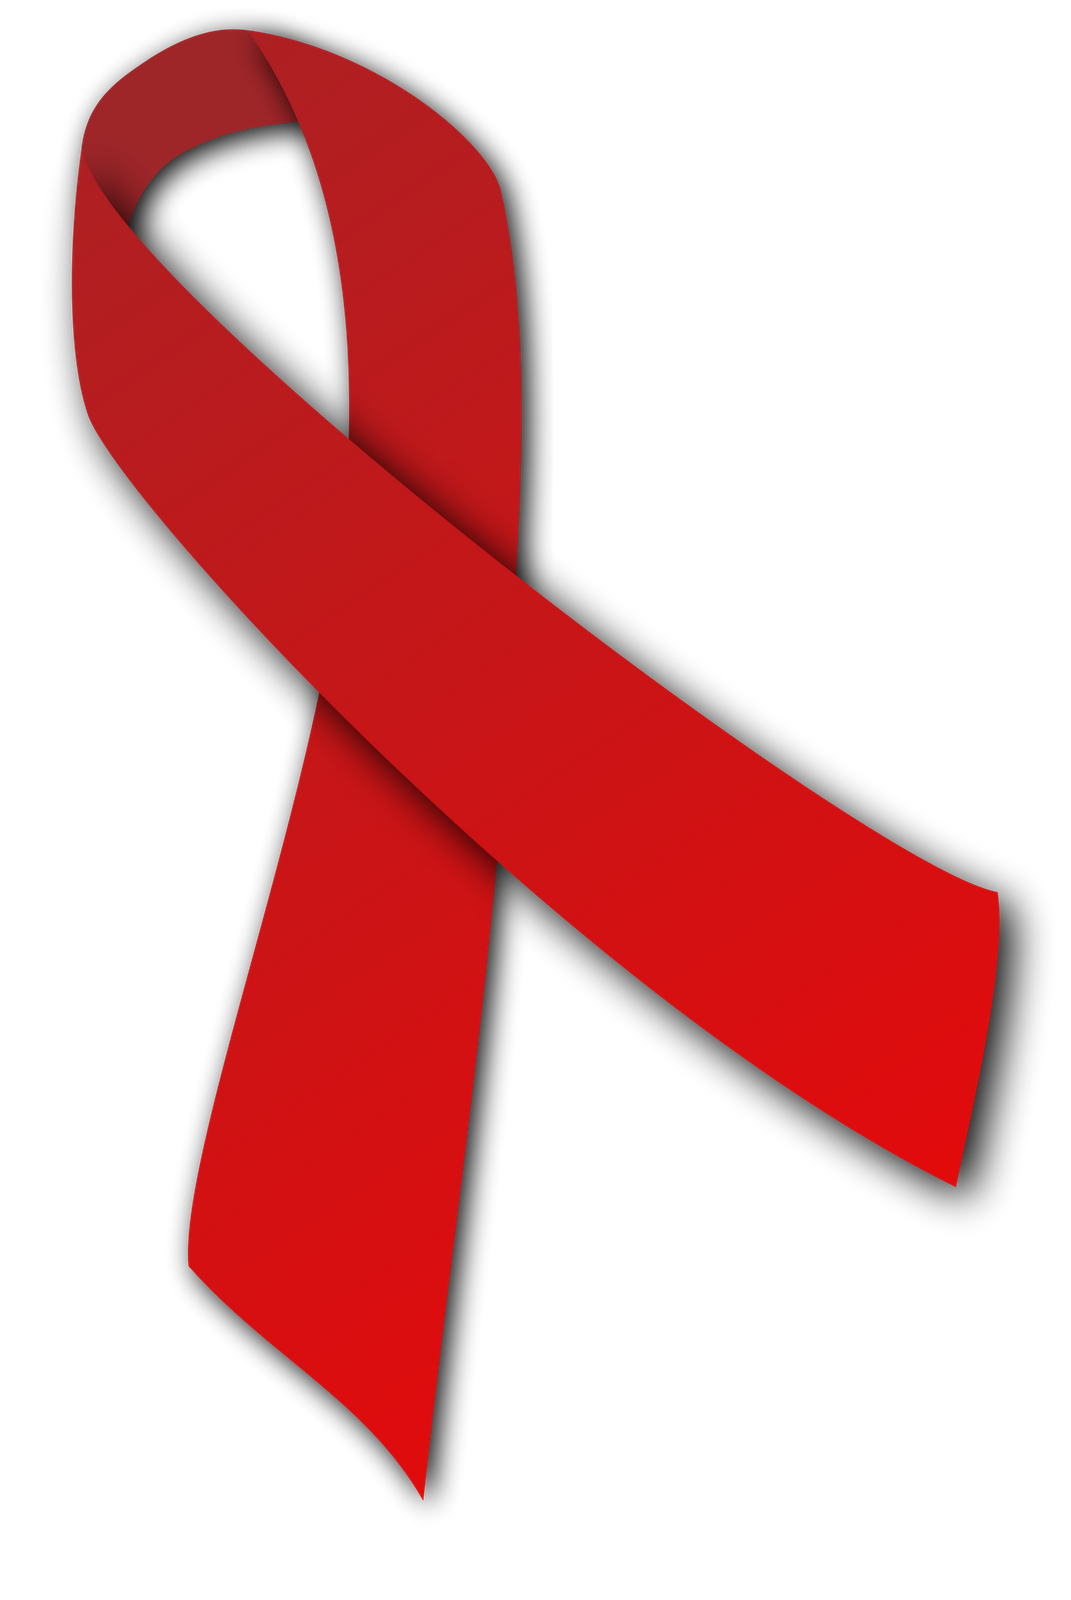 14 Best Photos of Red Awareness Ribbon Clip Art 